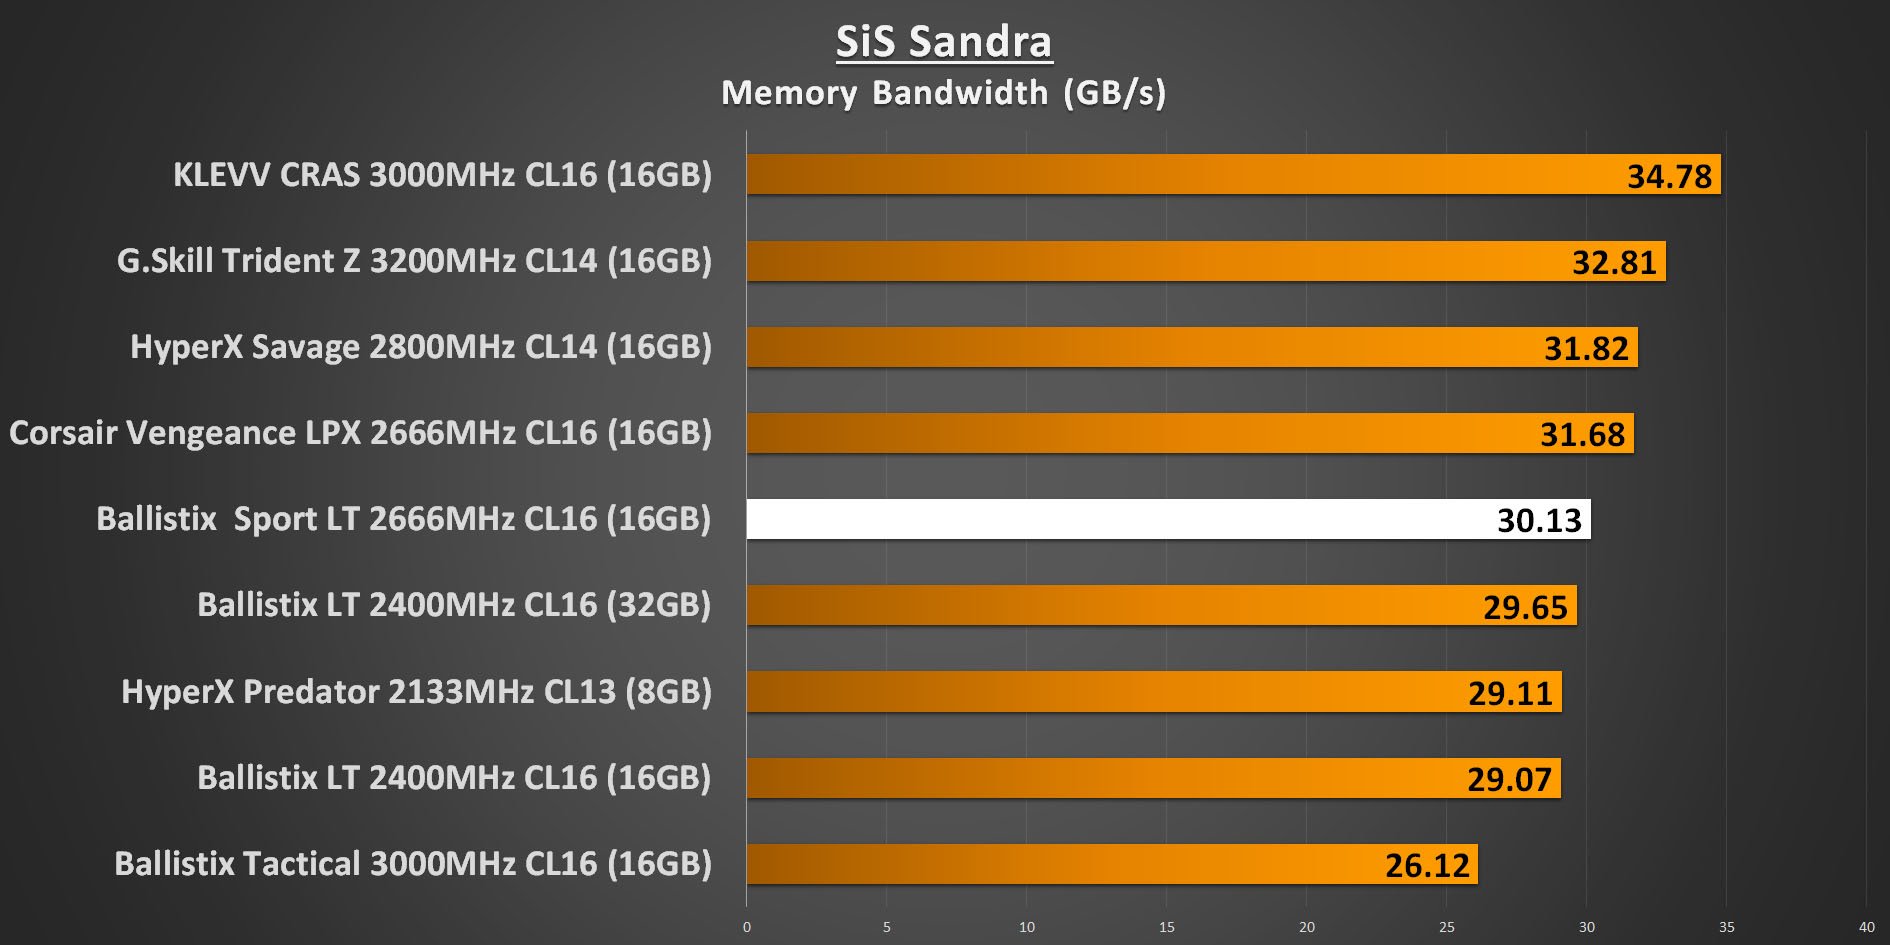 Ballistix Sport LT 2666MHz - SiS Sandra Memory Bandwidth Performance